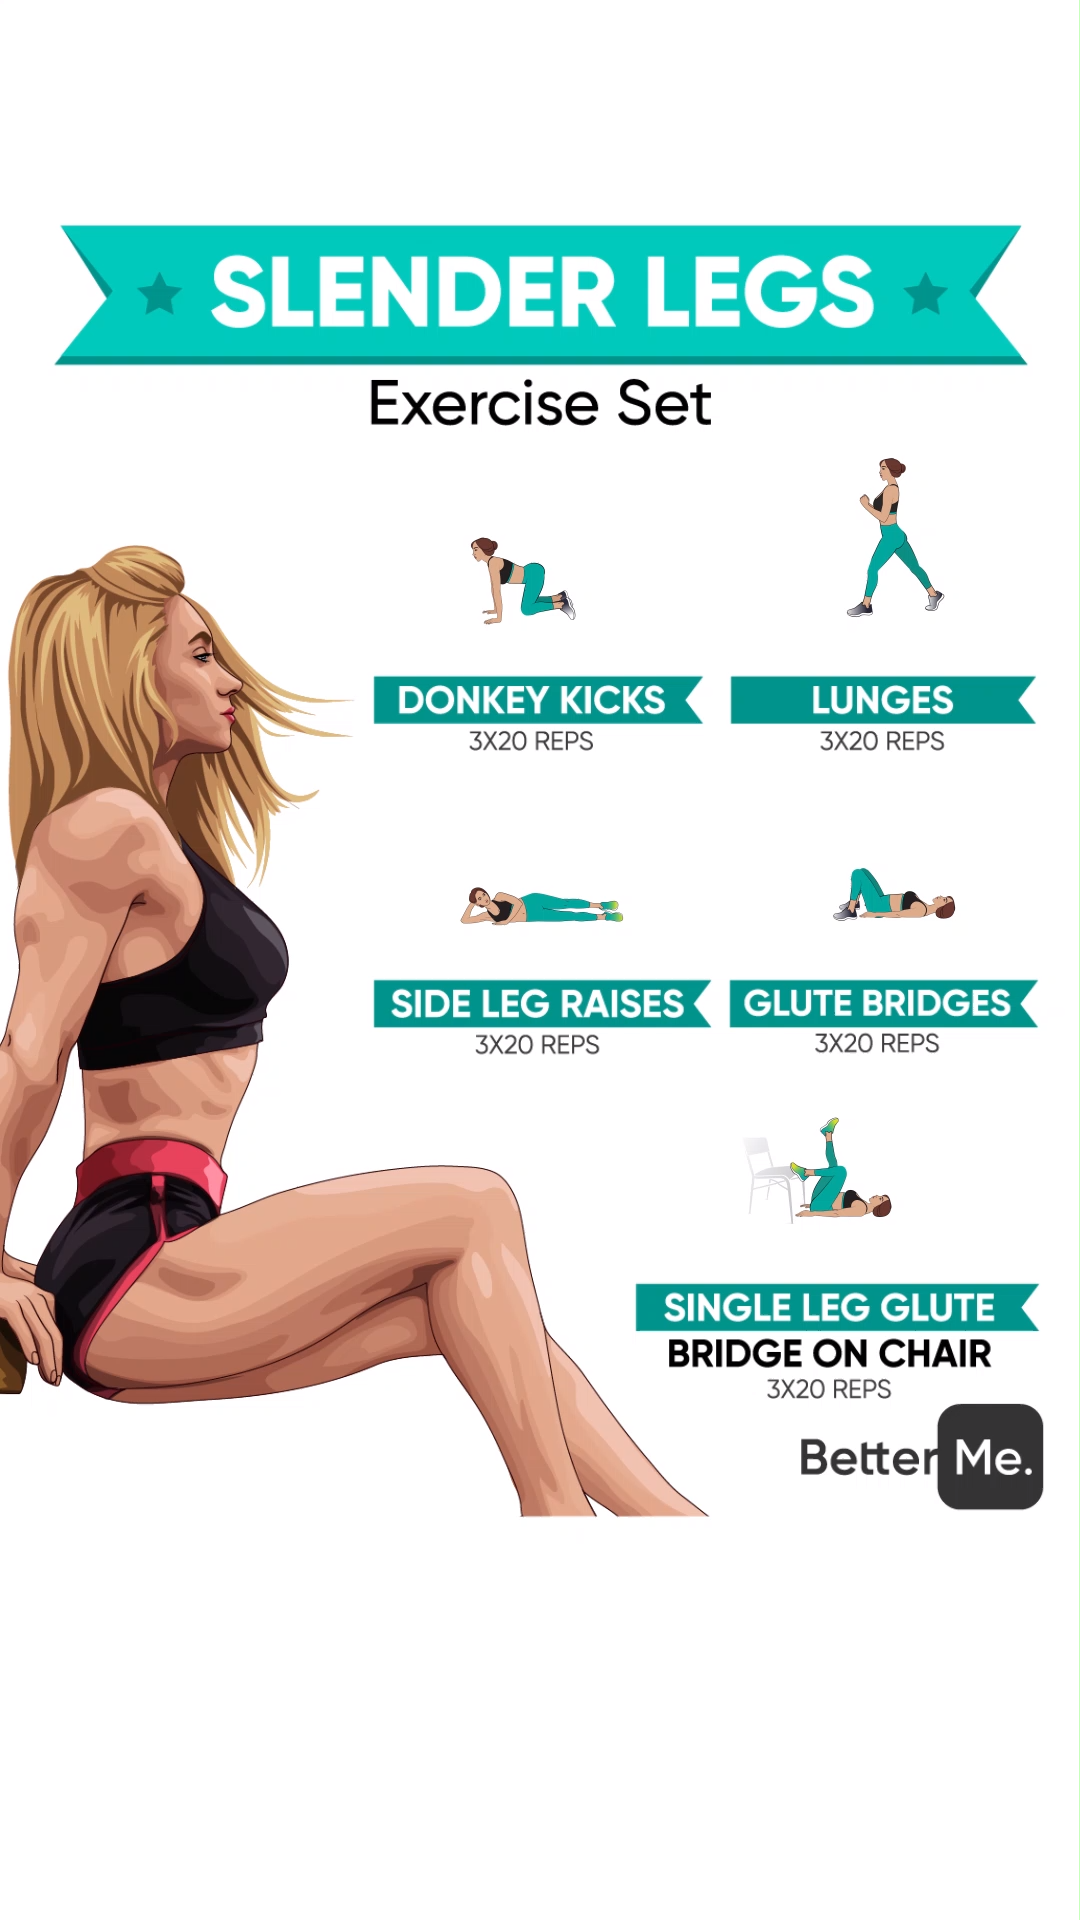 Slender legs exercise set -   23 fitness At Home videos ideas